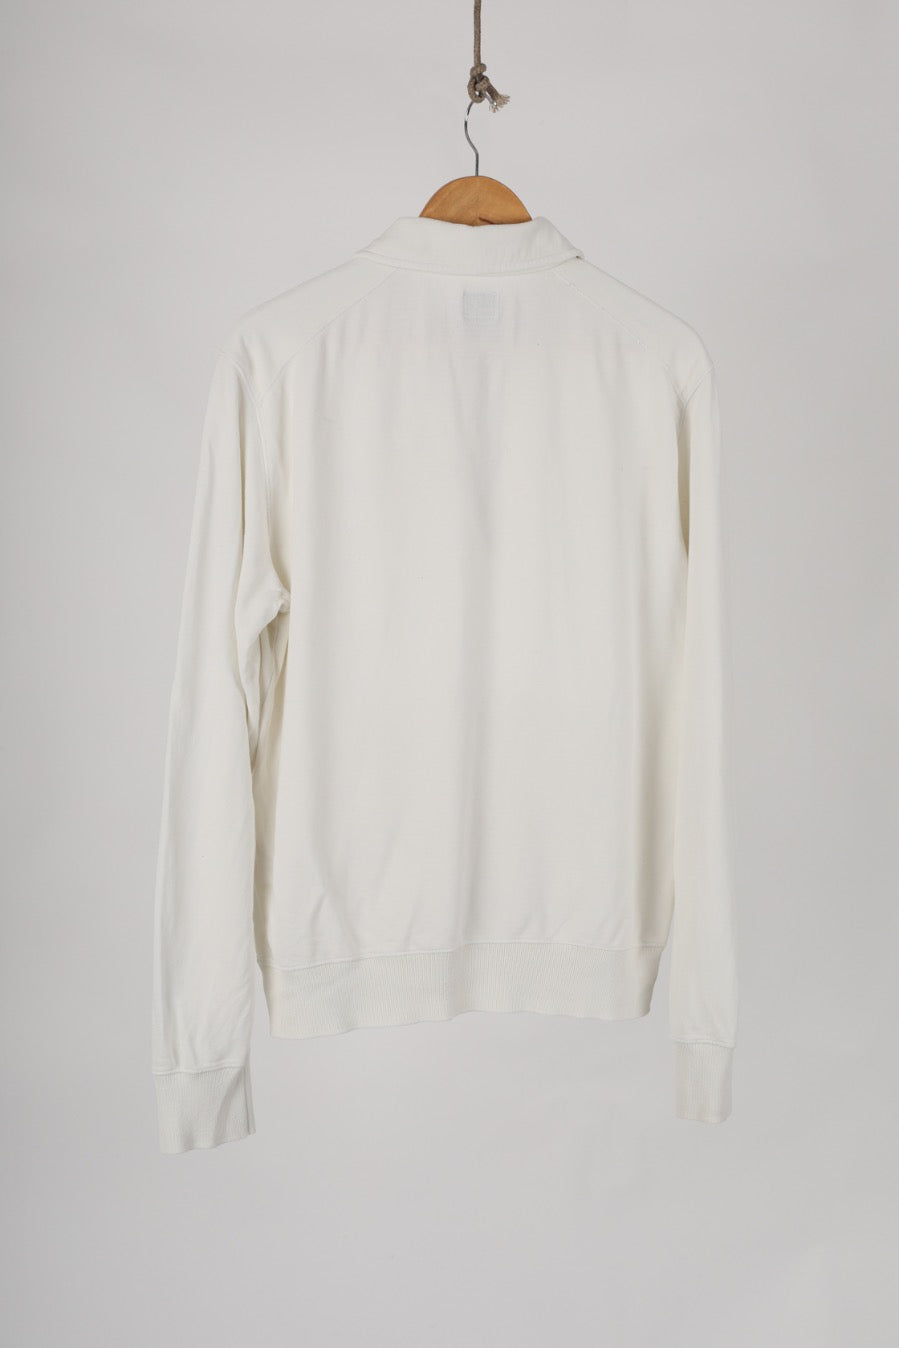 2006 C.P Company 1/4 zip sweatshirt (L)